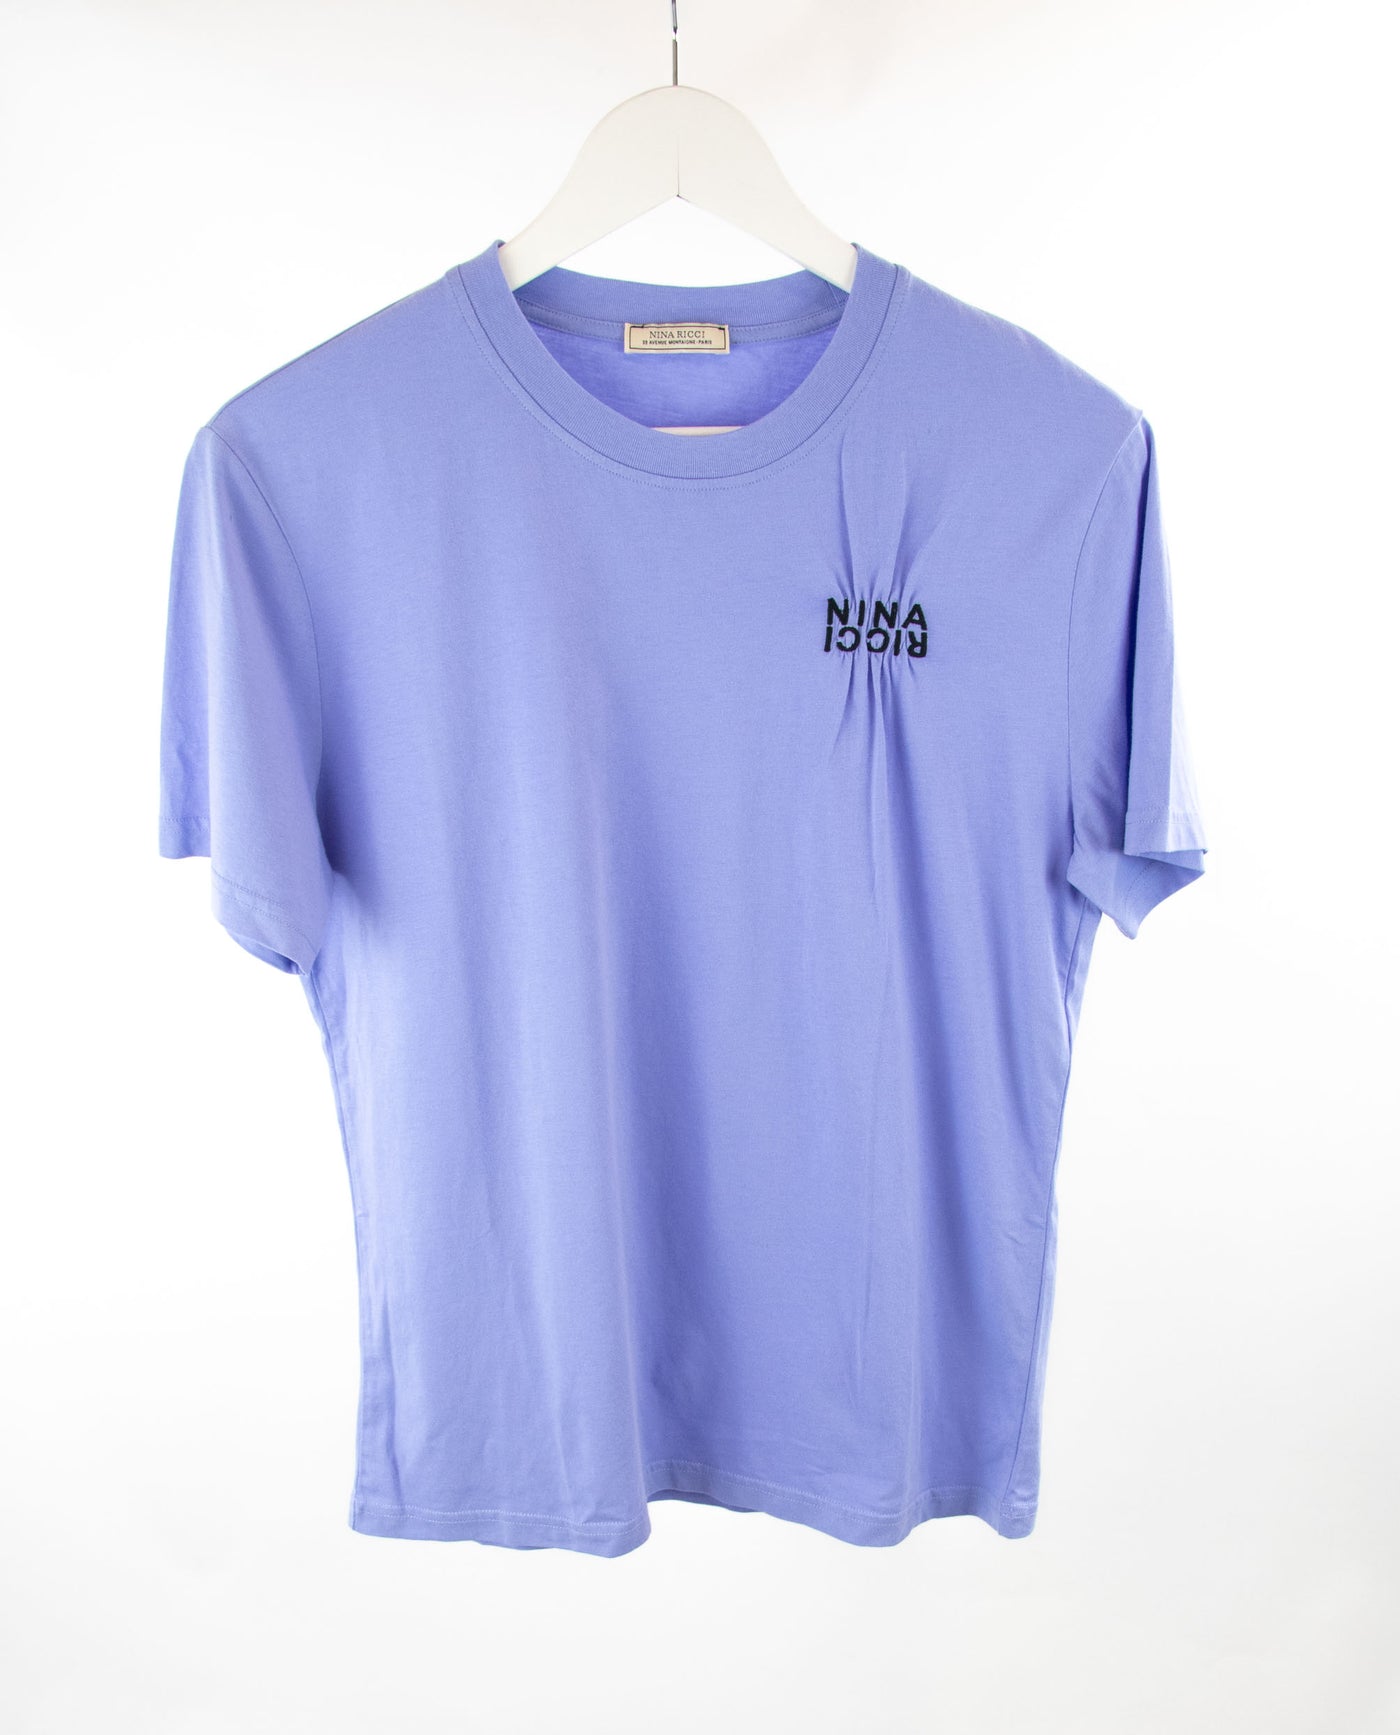 Camiseta lila NUEVO nina ricci